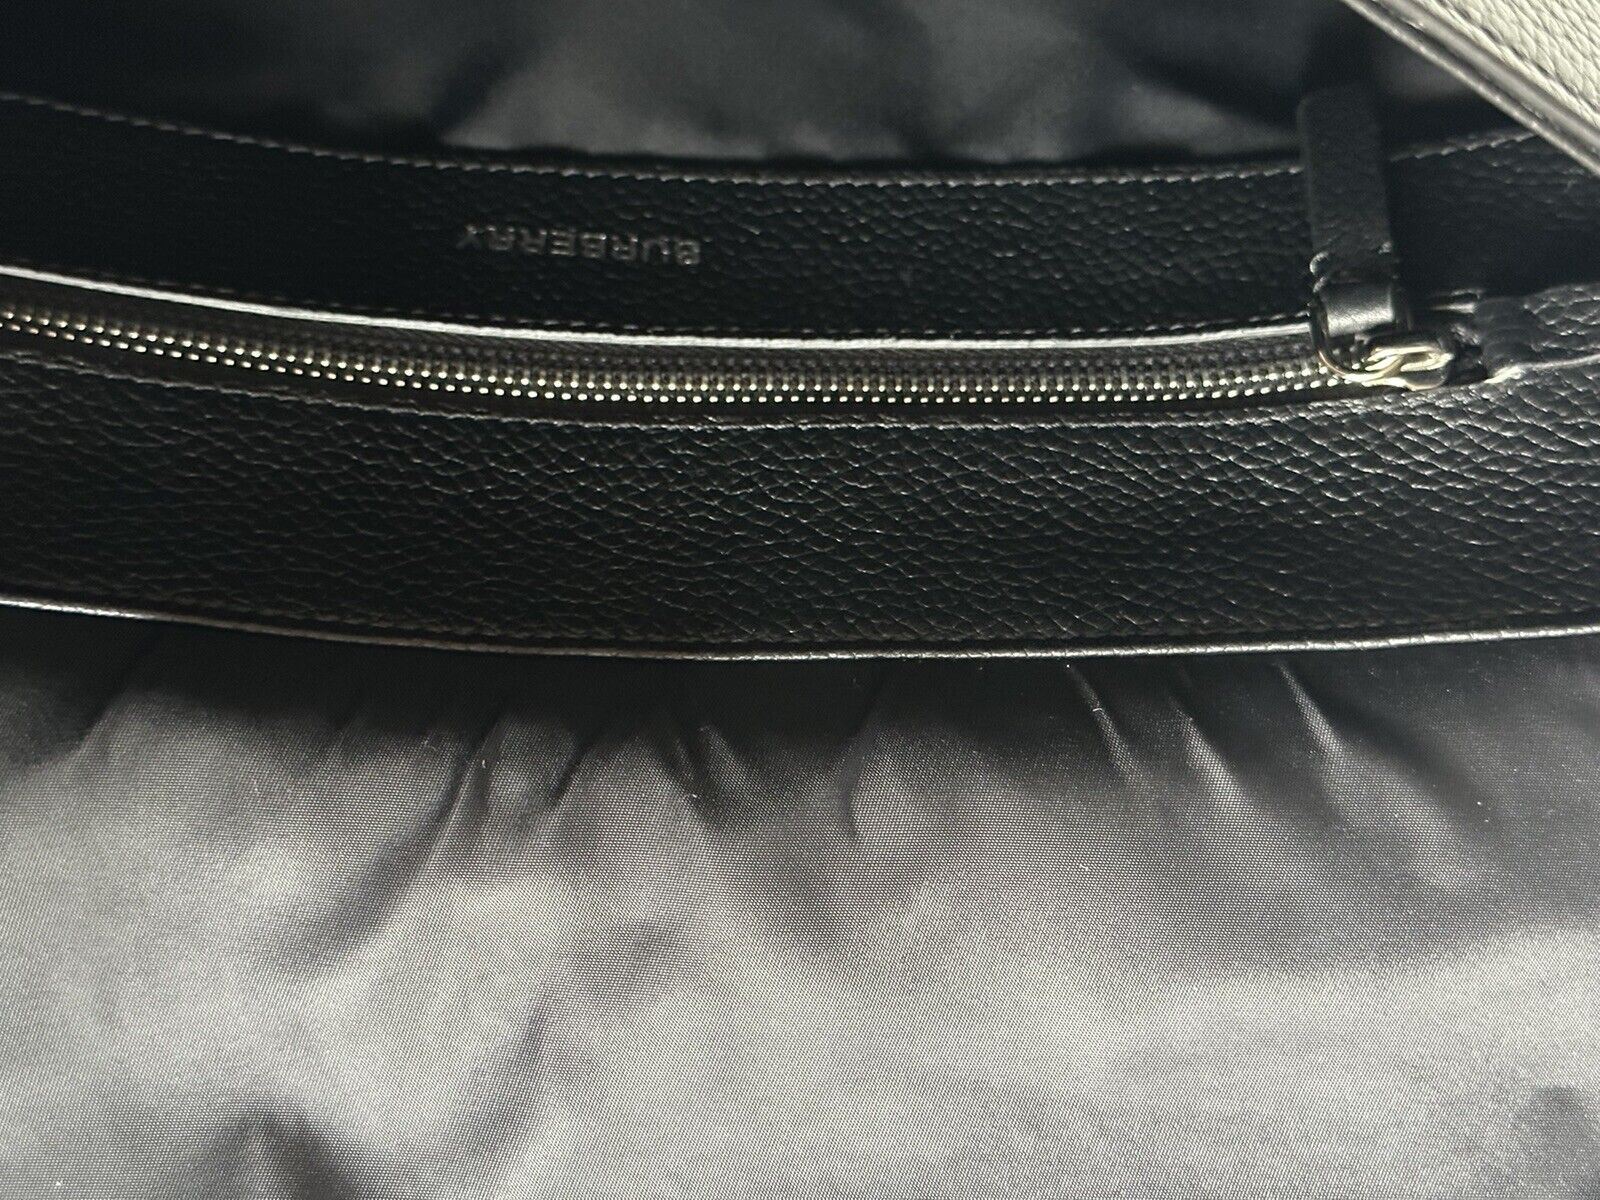 NWT $1350 Burberry Bruno Кожаная сумка-мессенджер с логотипом Темно-серого цвета 80507621 